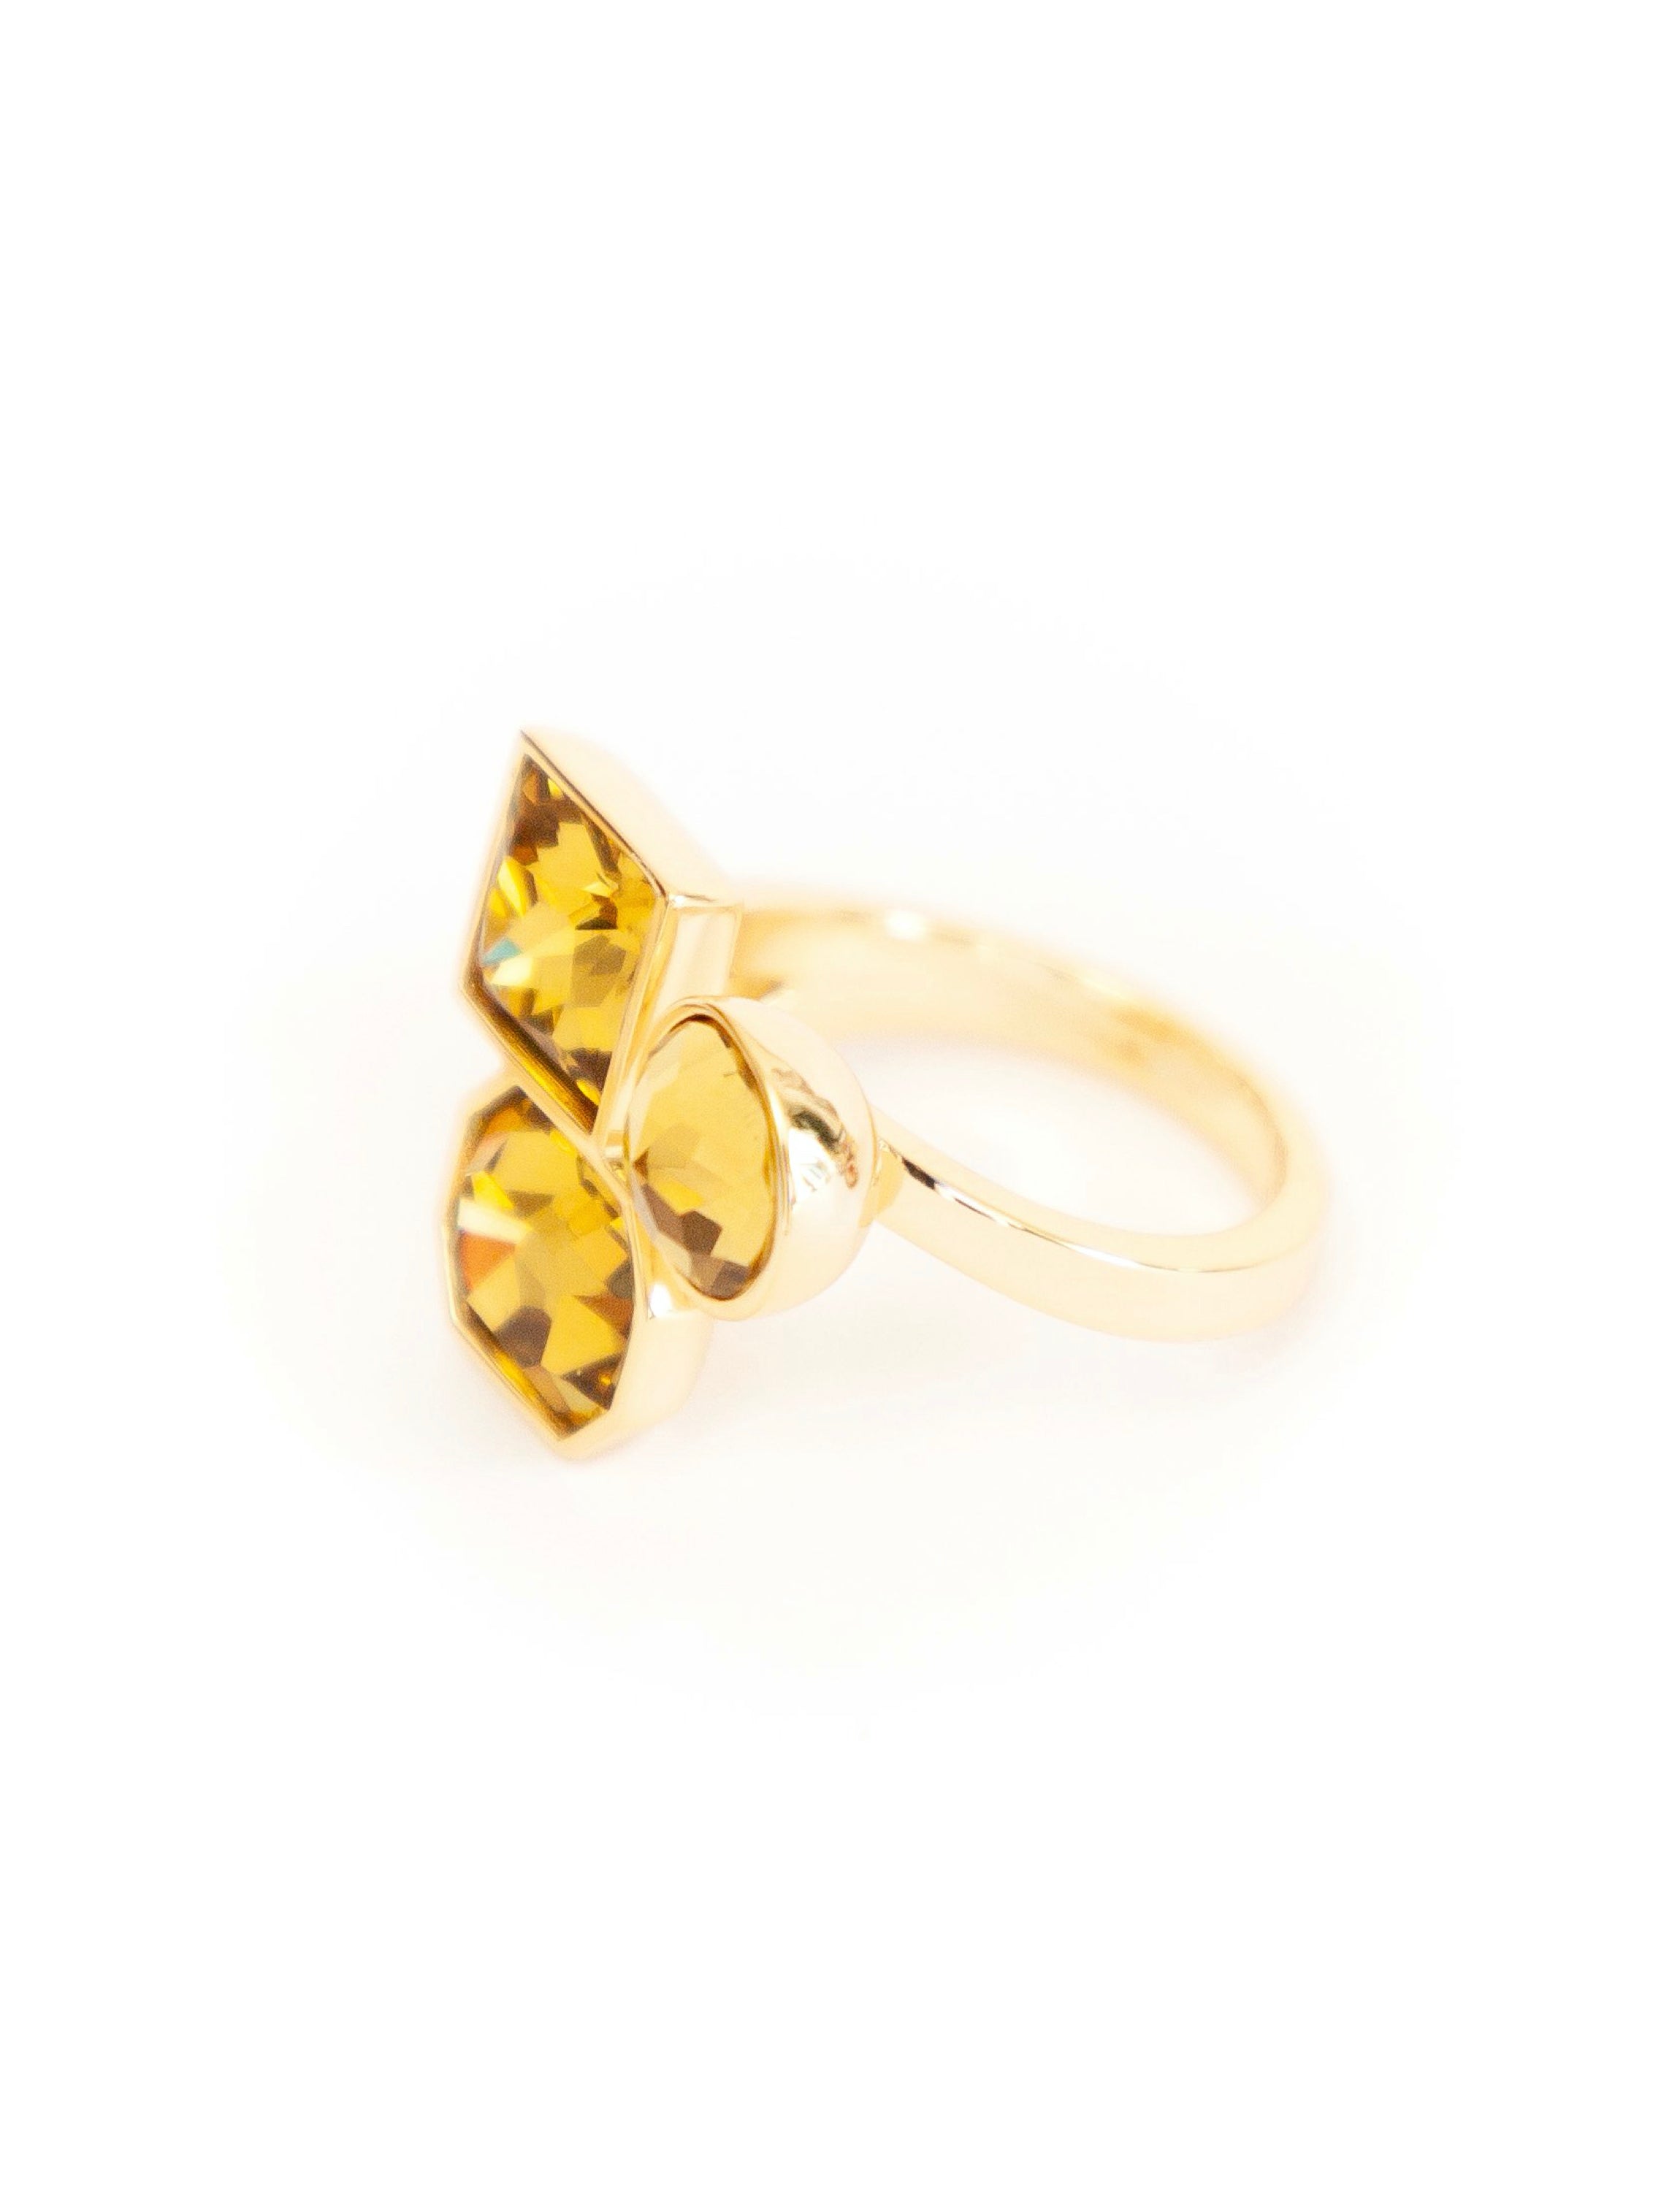 Honey Gold Adjustable Ring